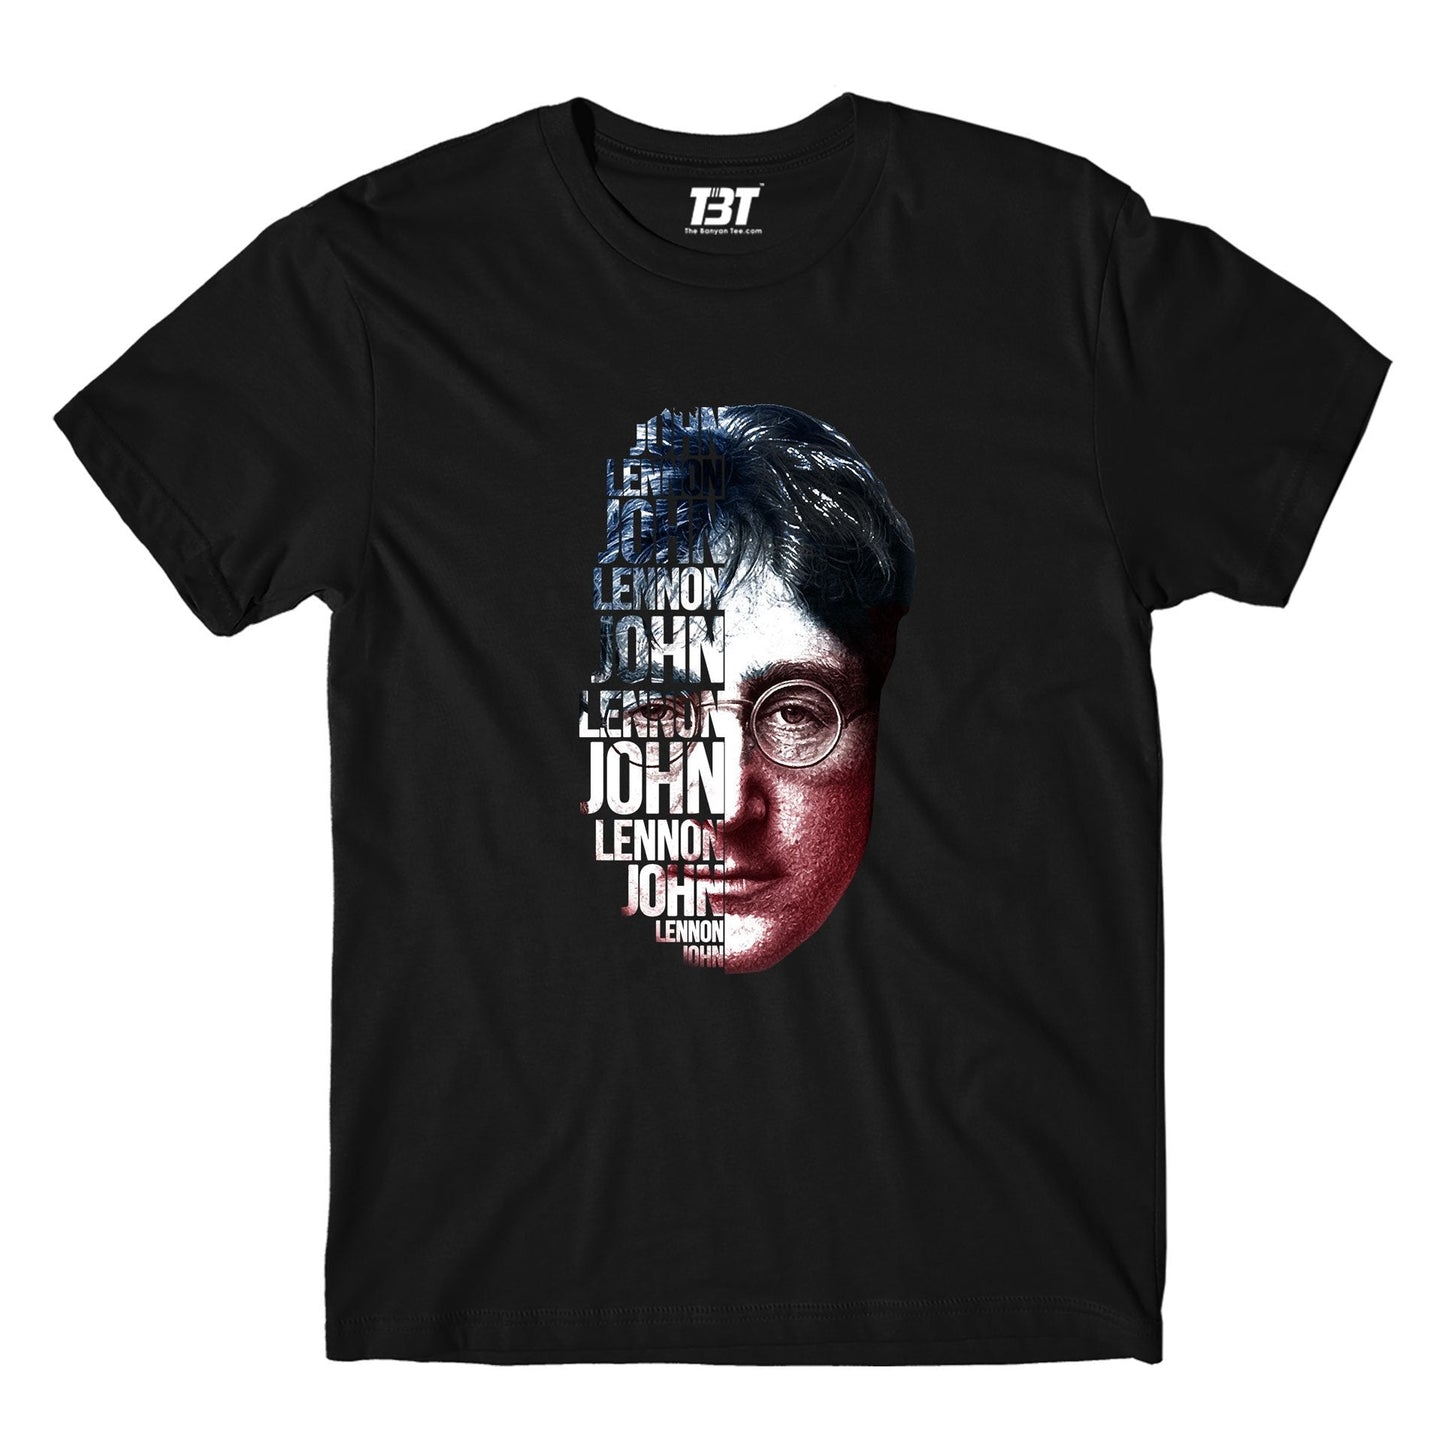 The Beatles T-shirt - John Lennon T-shirt The Banyan Tee TBT shirt for men women boys designer stylish online cotton usa united states